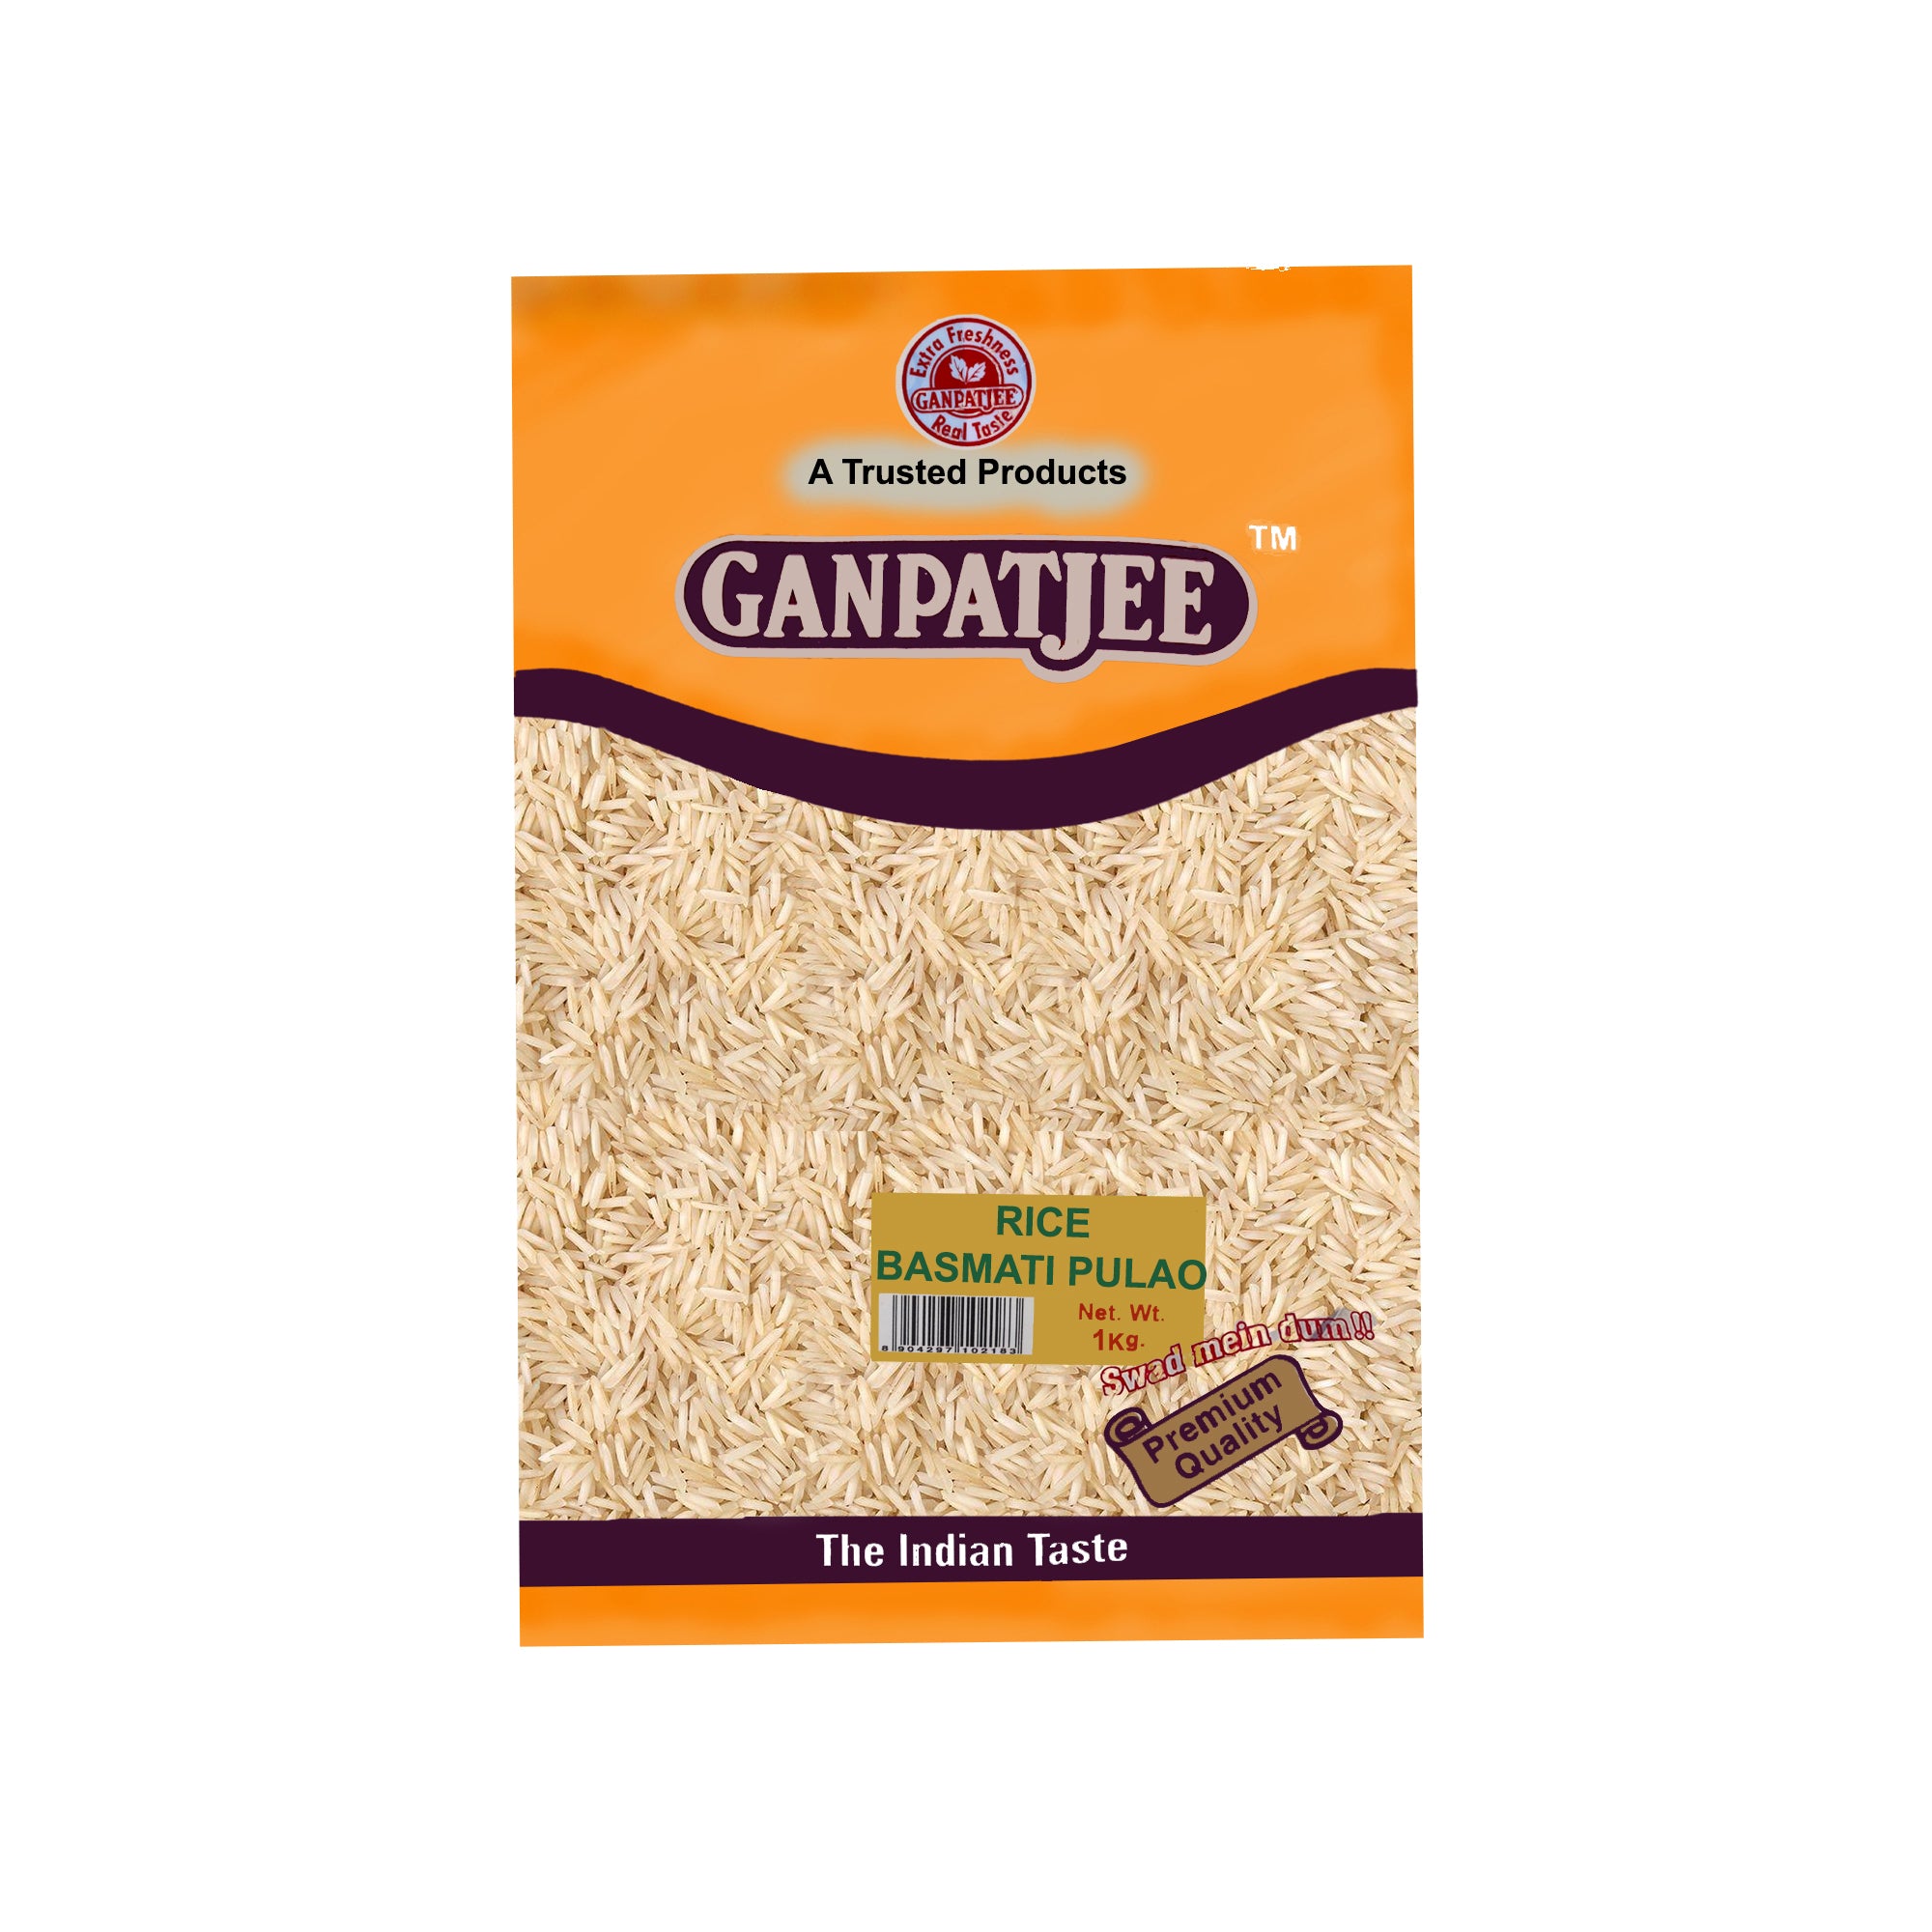 Ganpatjee Basmati Pulao Rice 1kg